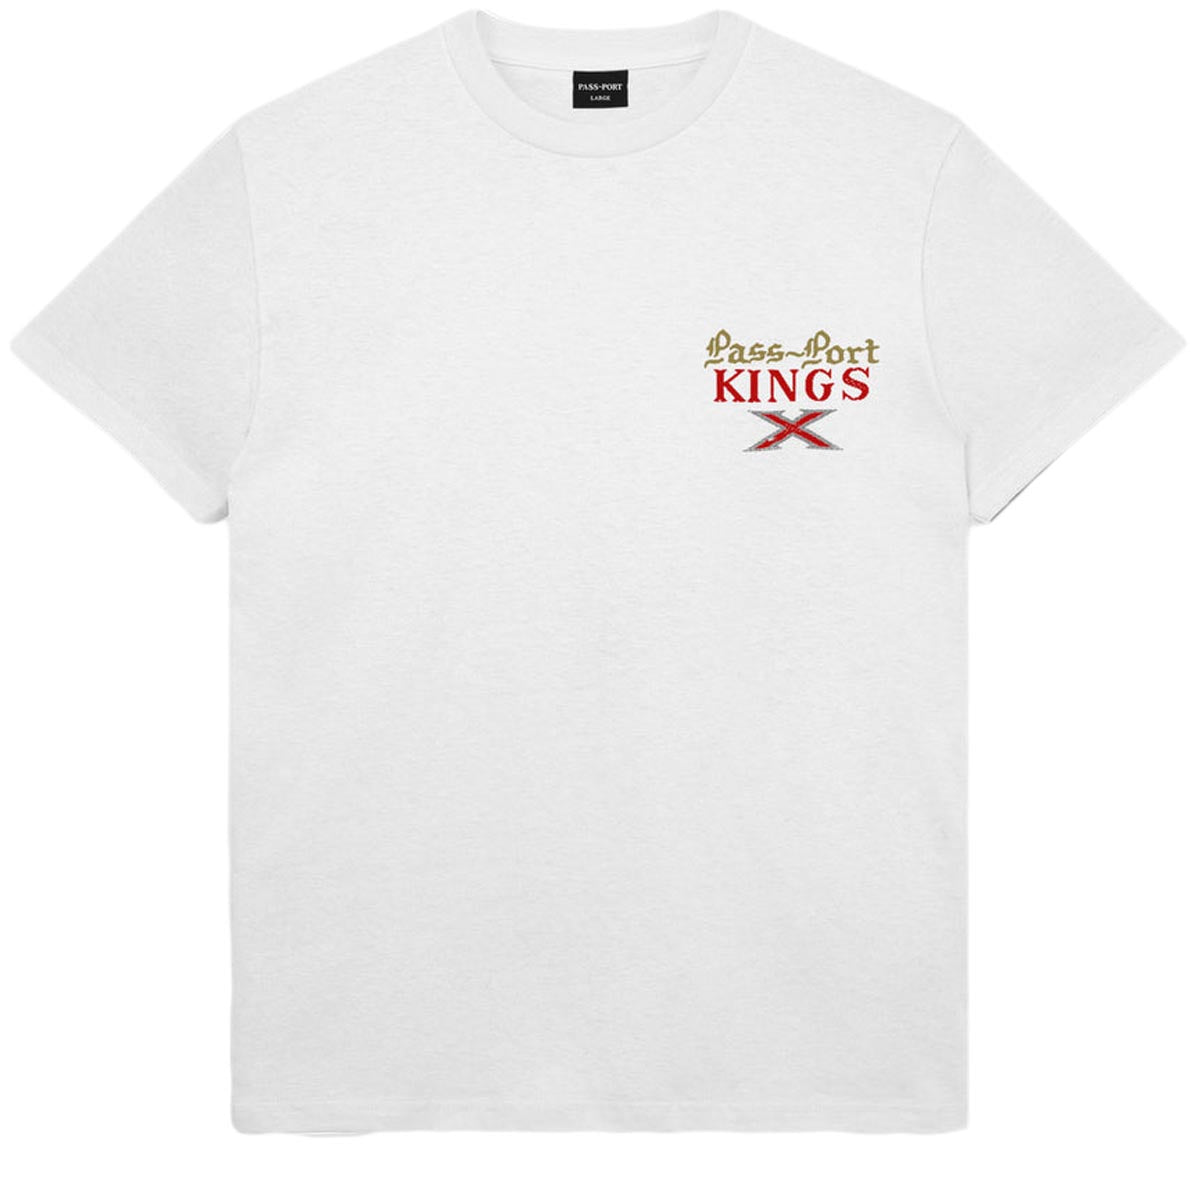 Passport Kings X T-Shirt - White image 2